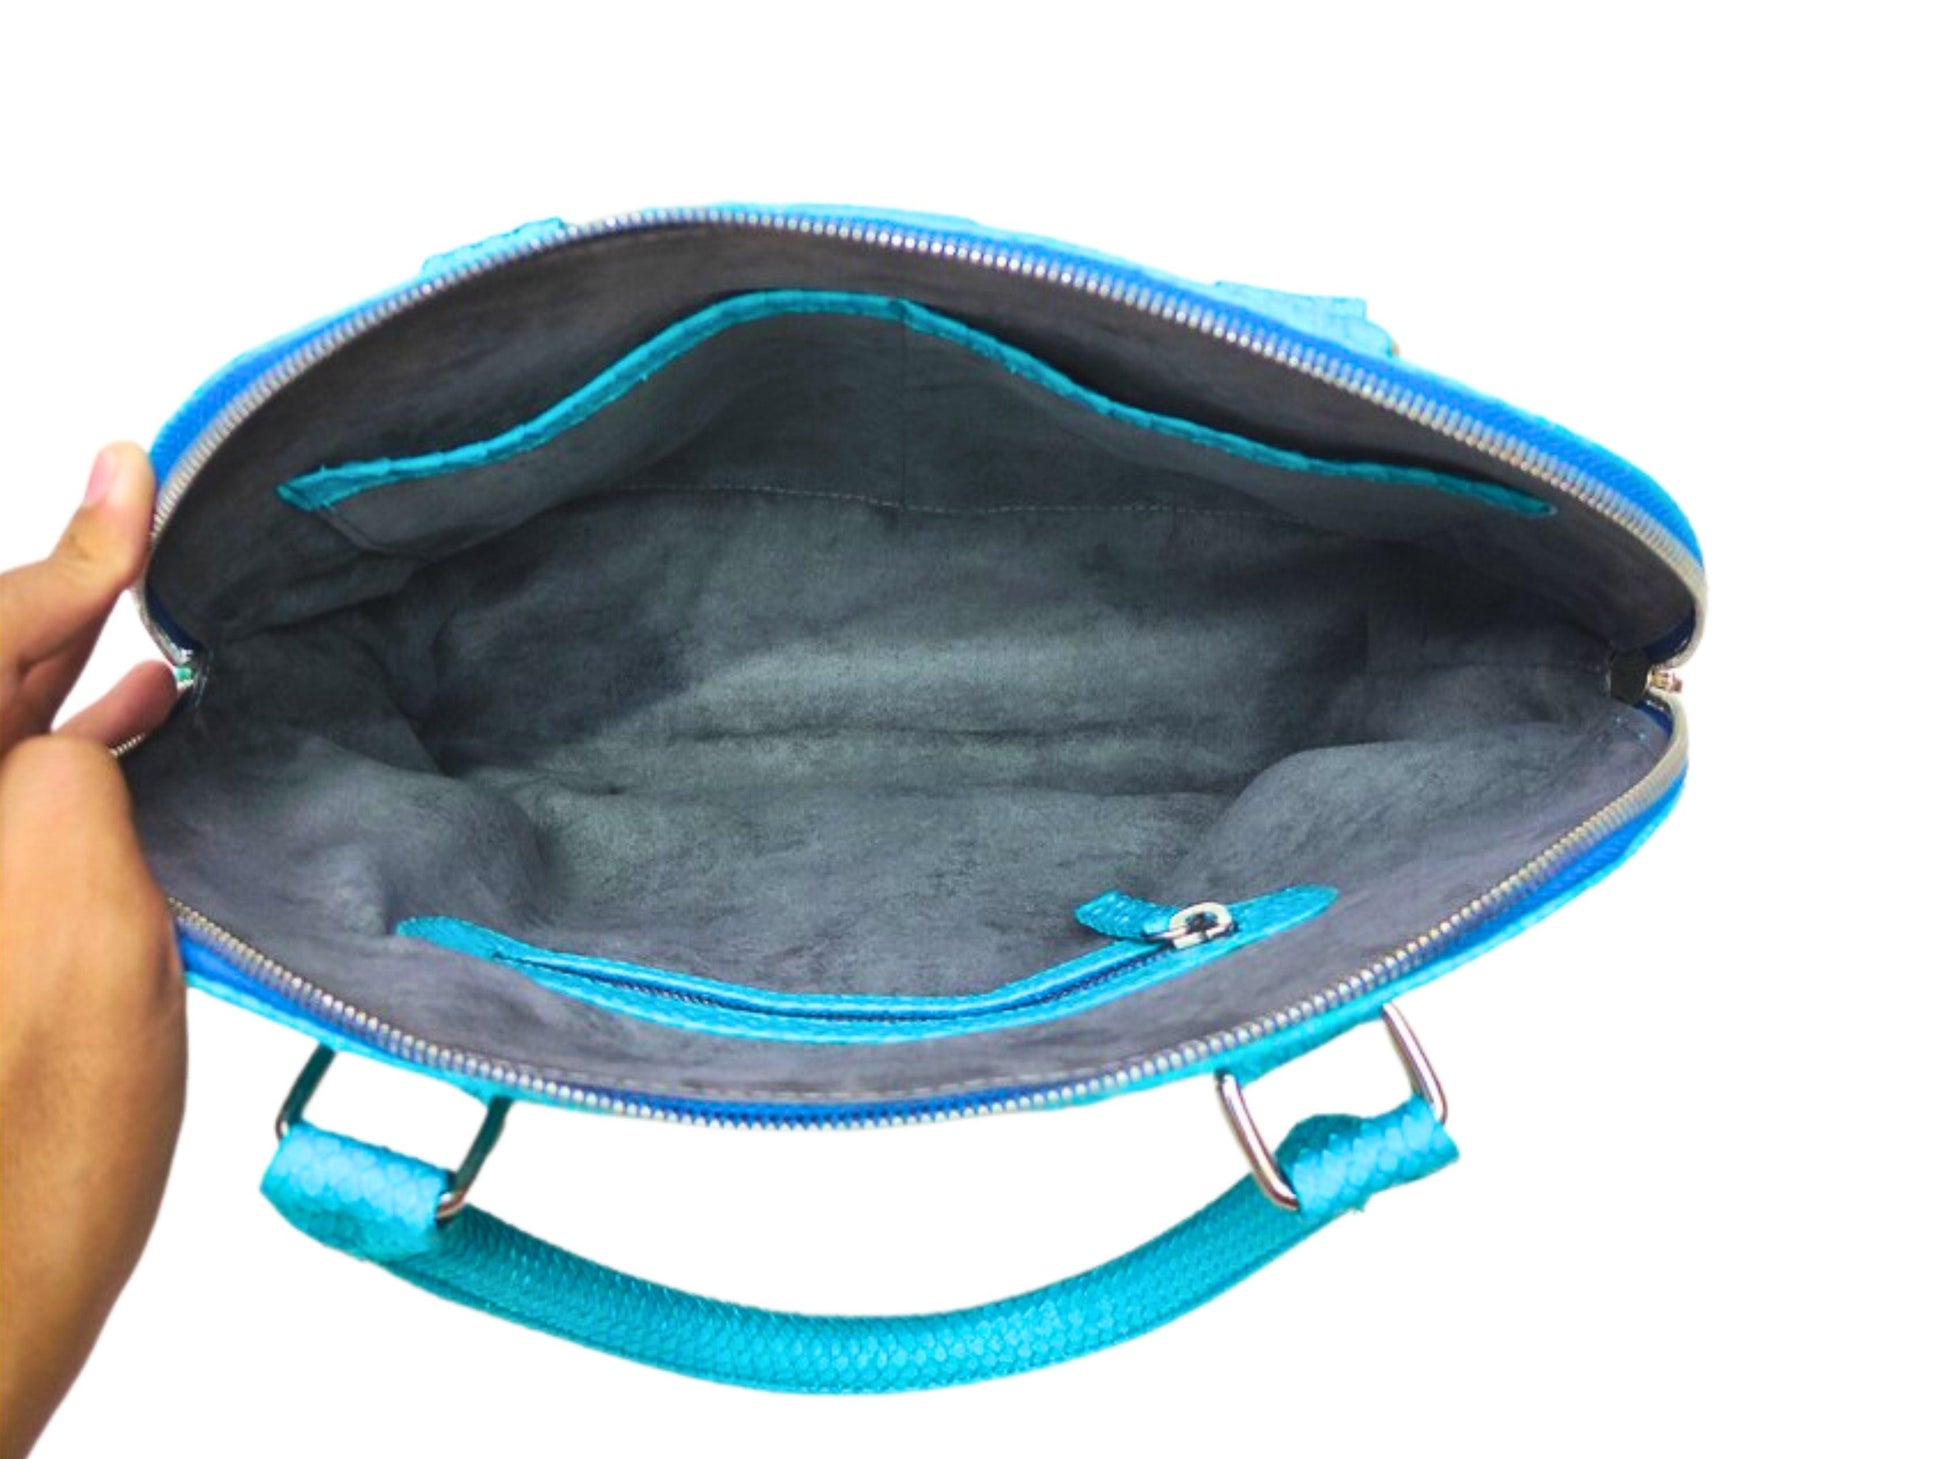 Laptop Bags Snakeskin Tote Laptop Bag,Trendy Work Bag,Fashionable Carryall Python Jacket by LFM Fashion